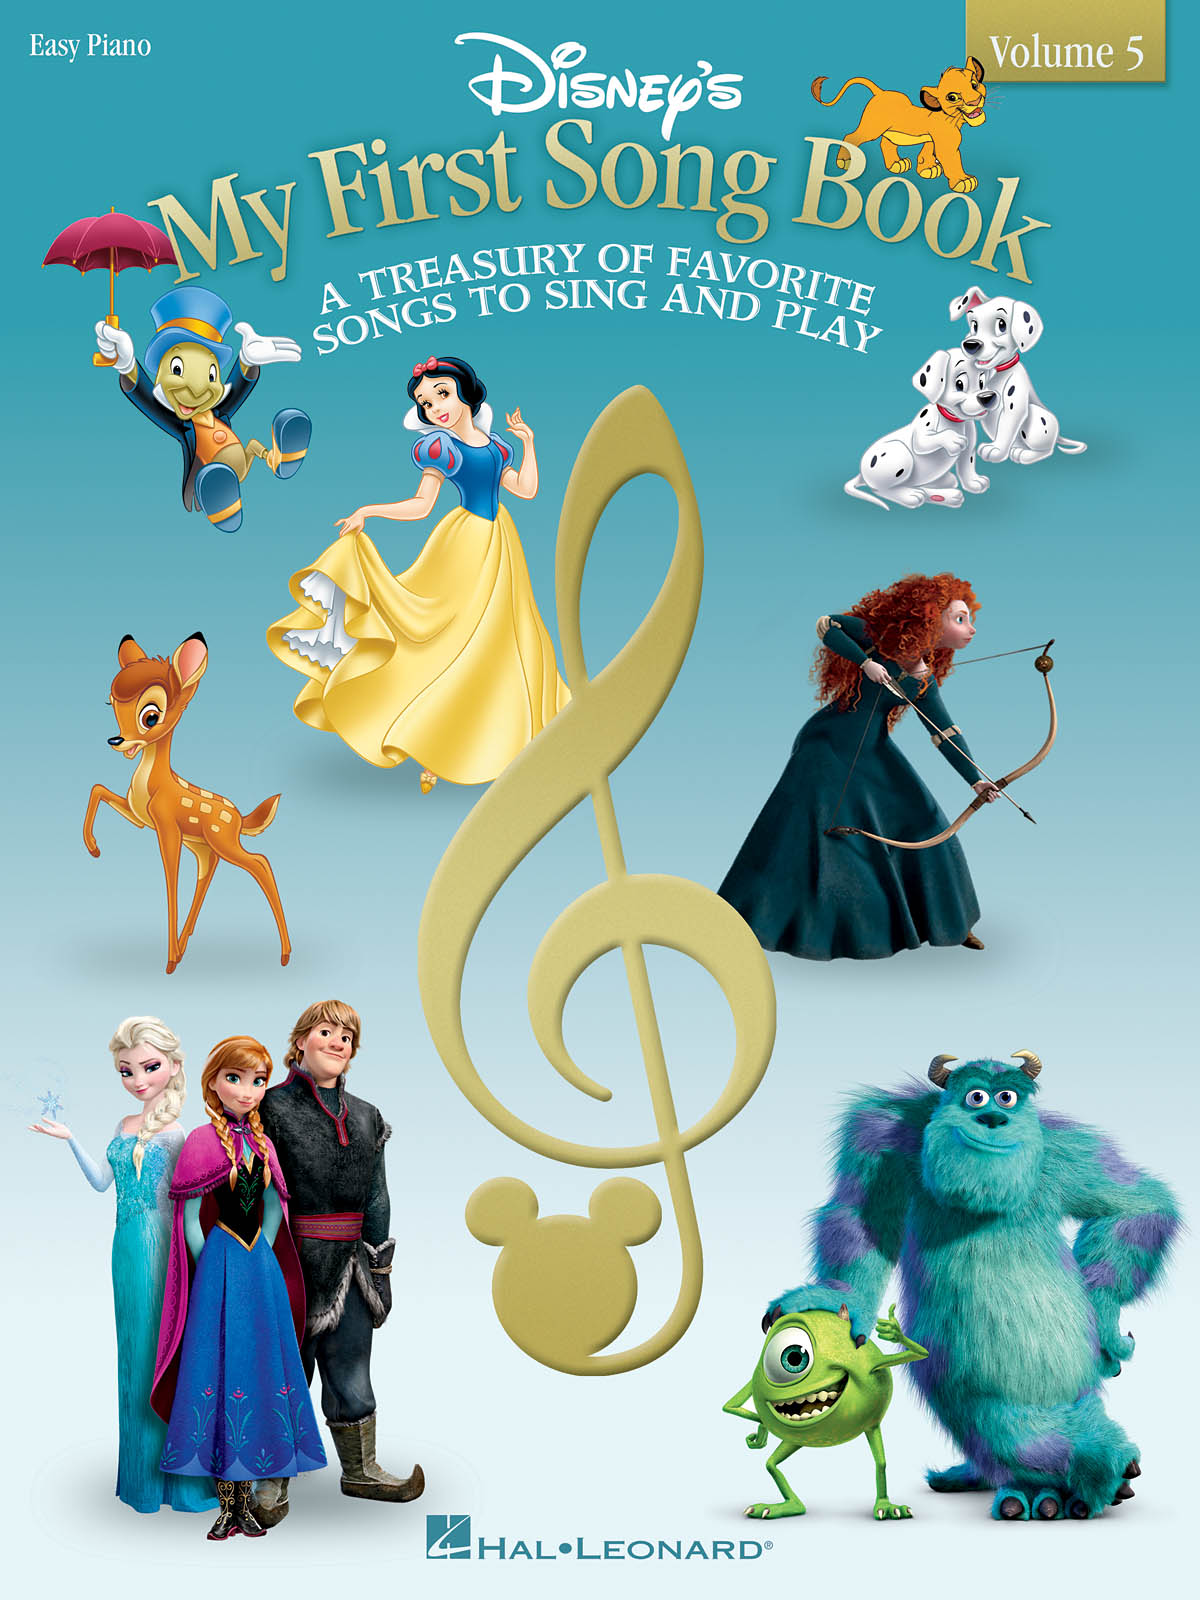 Disney’s My First Songbook – Volume 5